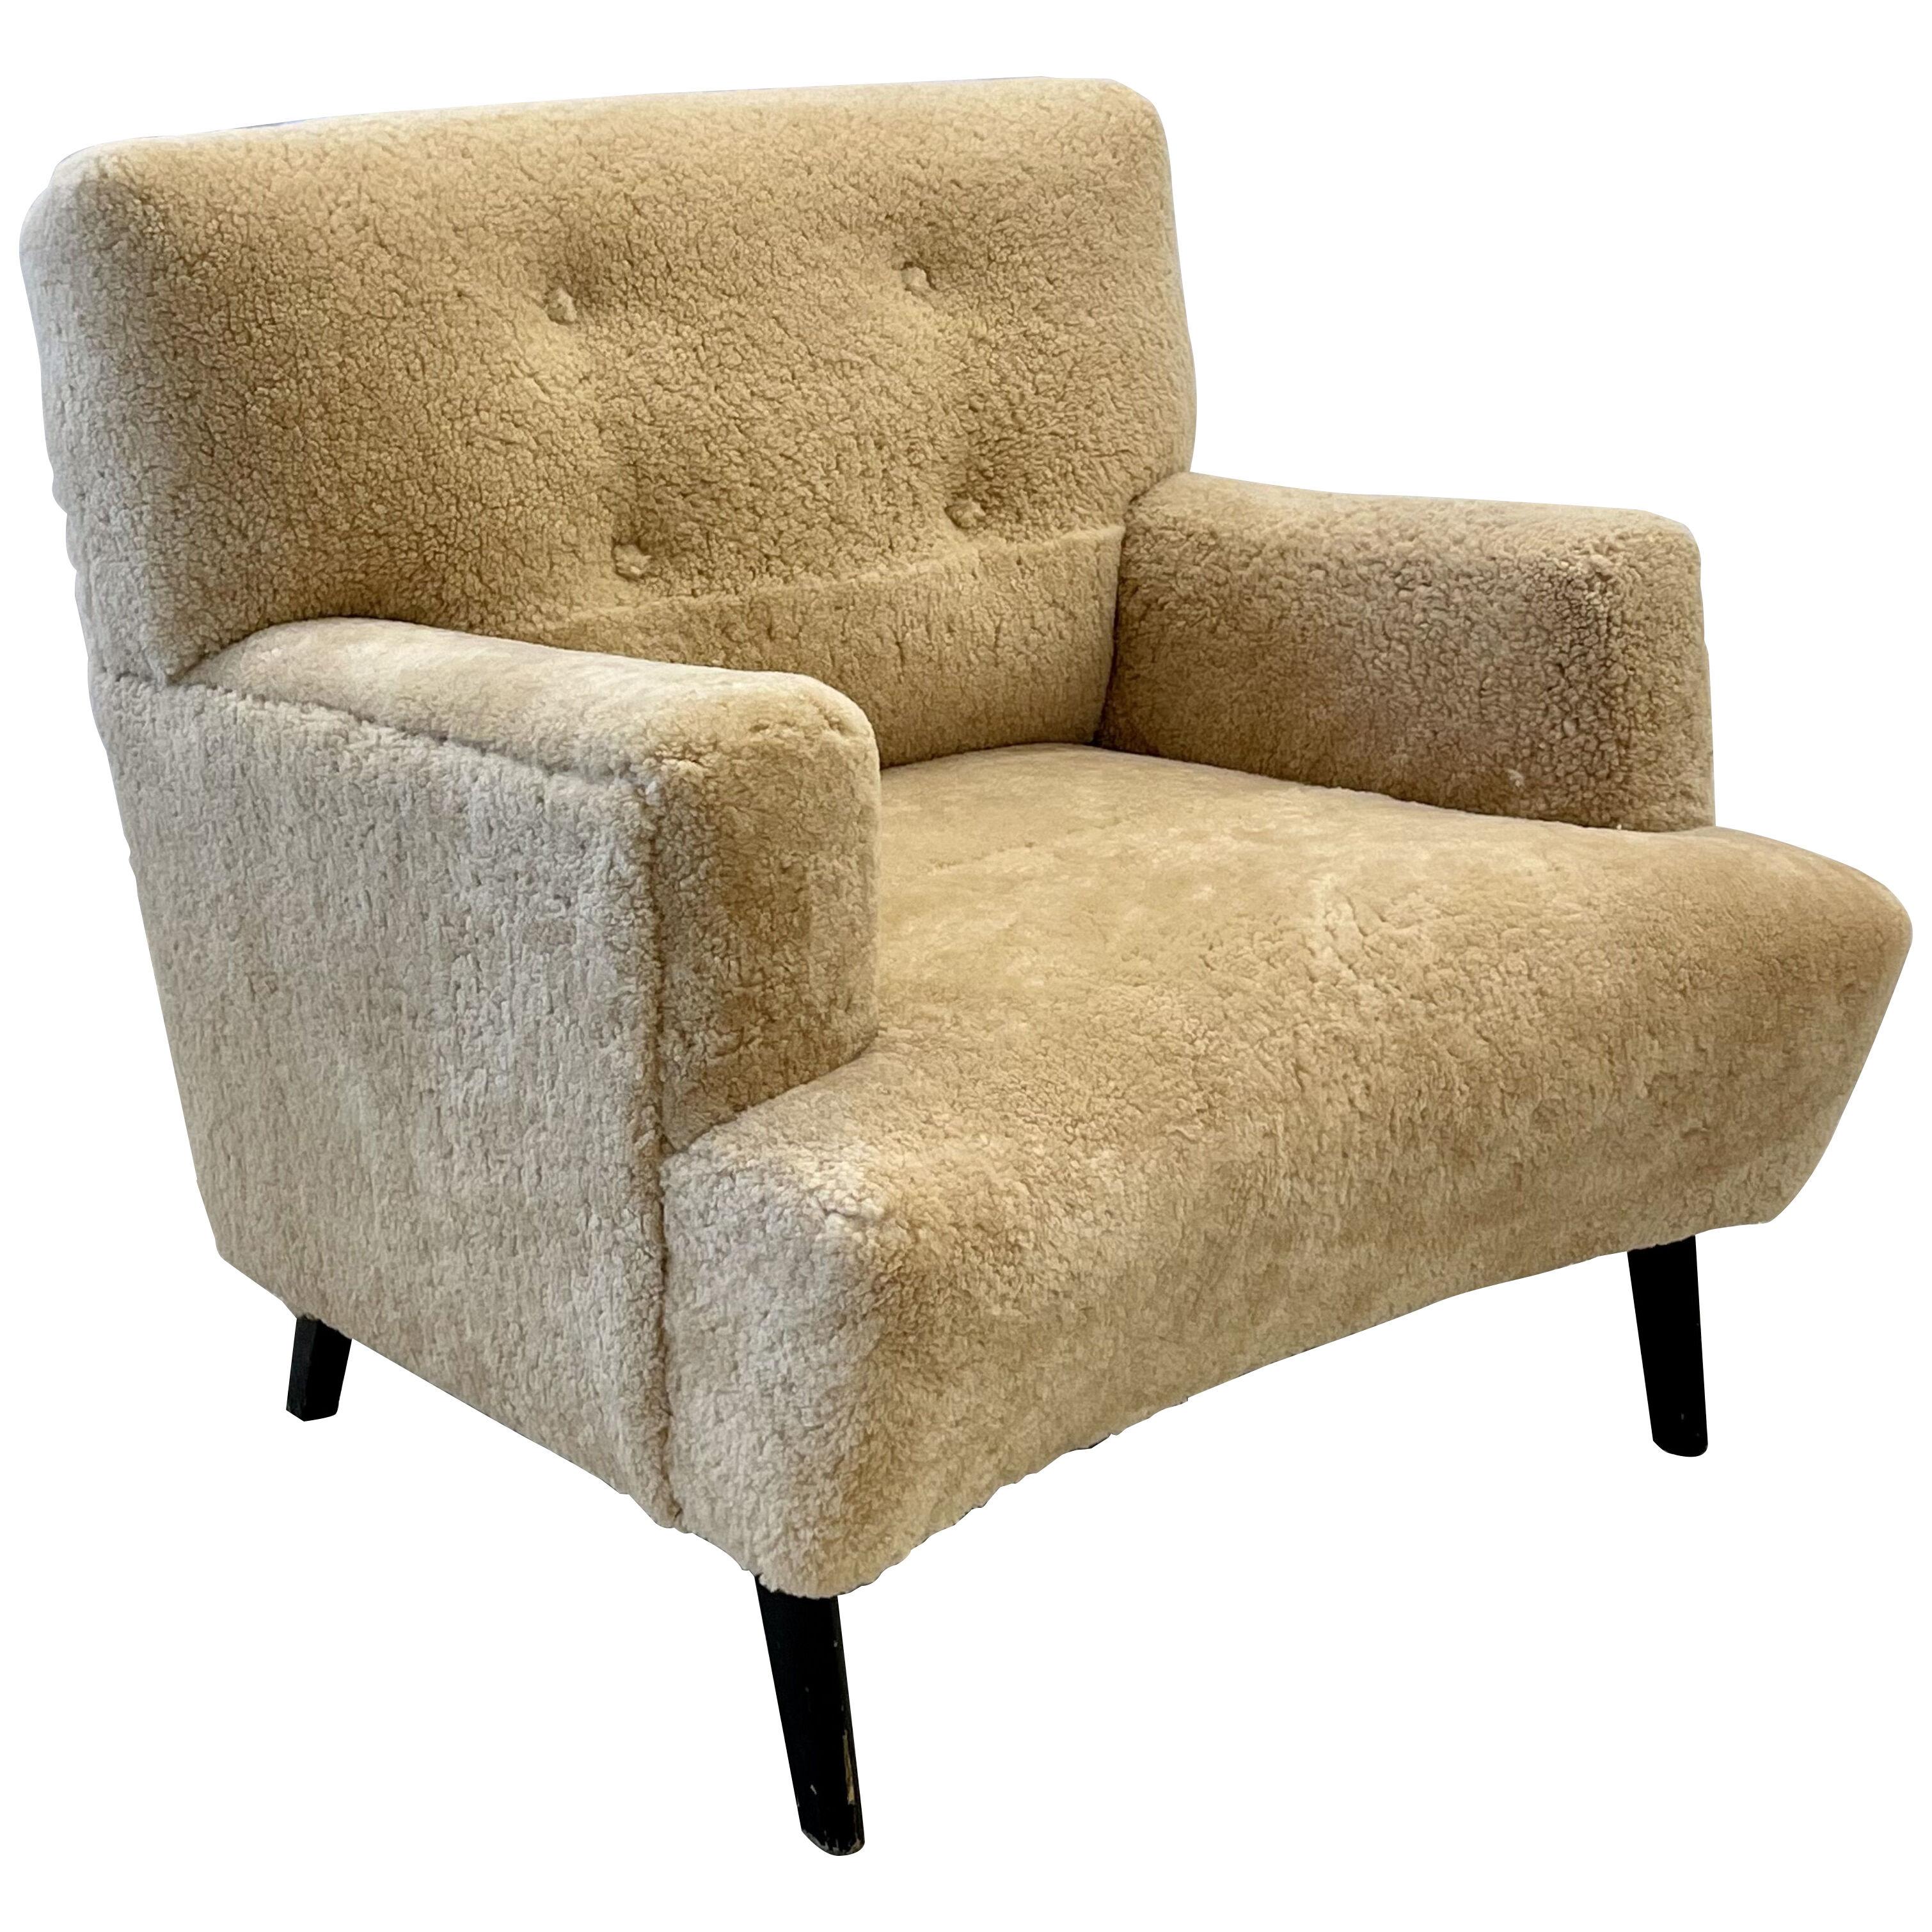 Art Deco, Mid-Century Box Form Lounge Armchair, Very Large, Honey Sheepskin, 50s